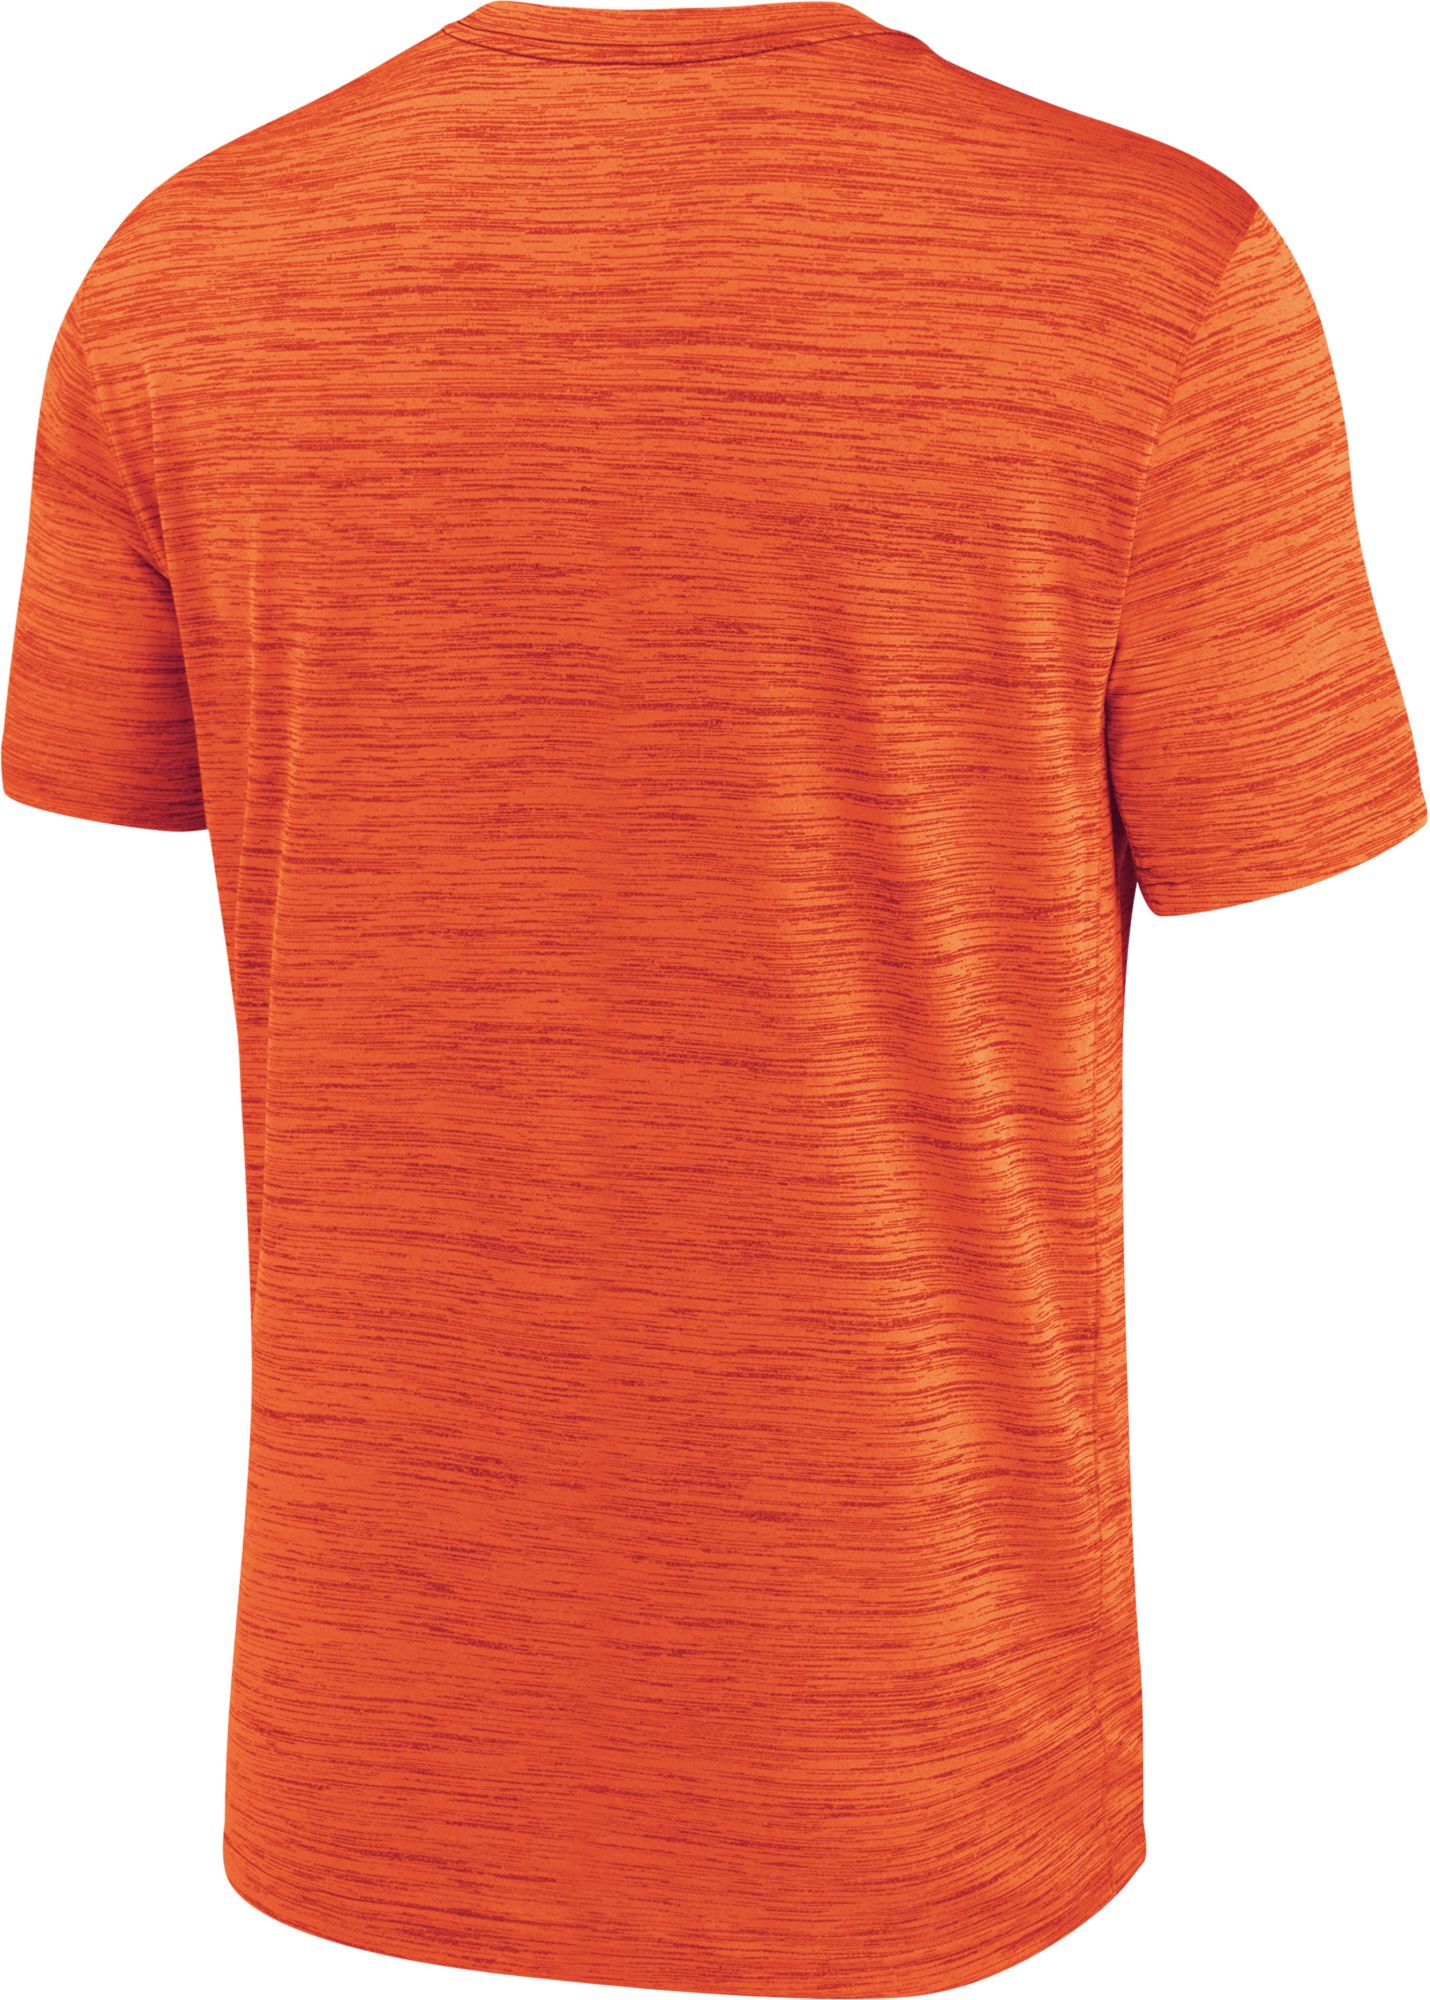 Nike Men's Houston Astros Orange Authentic Collection Velocity T-Shirt